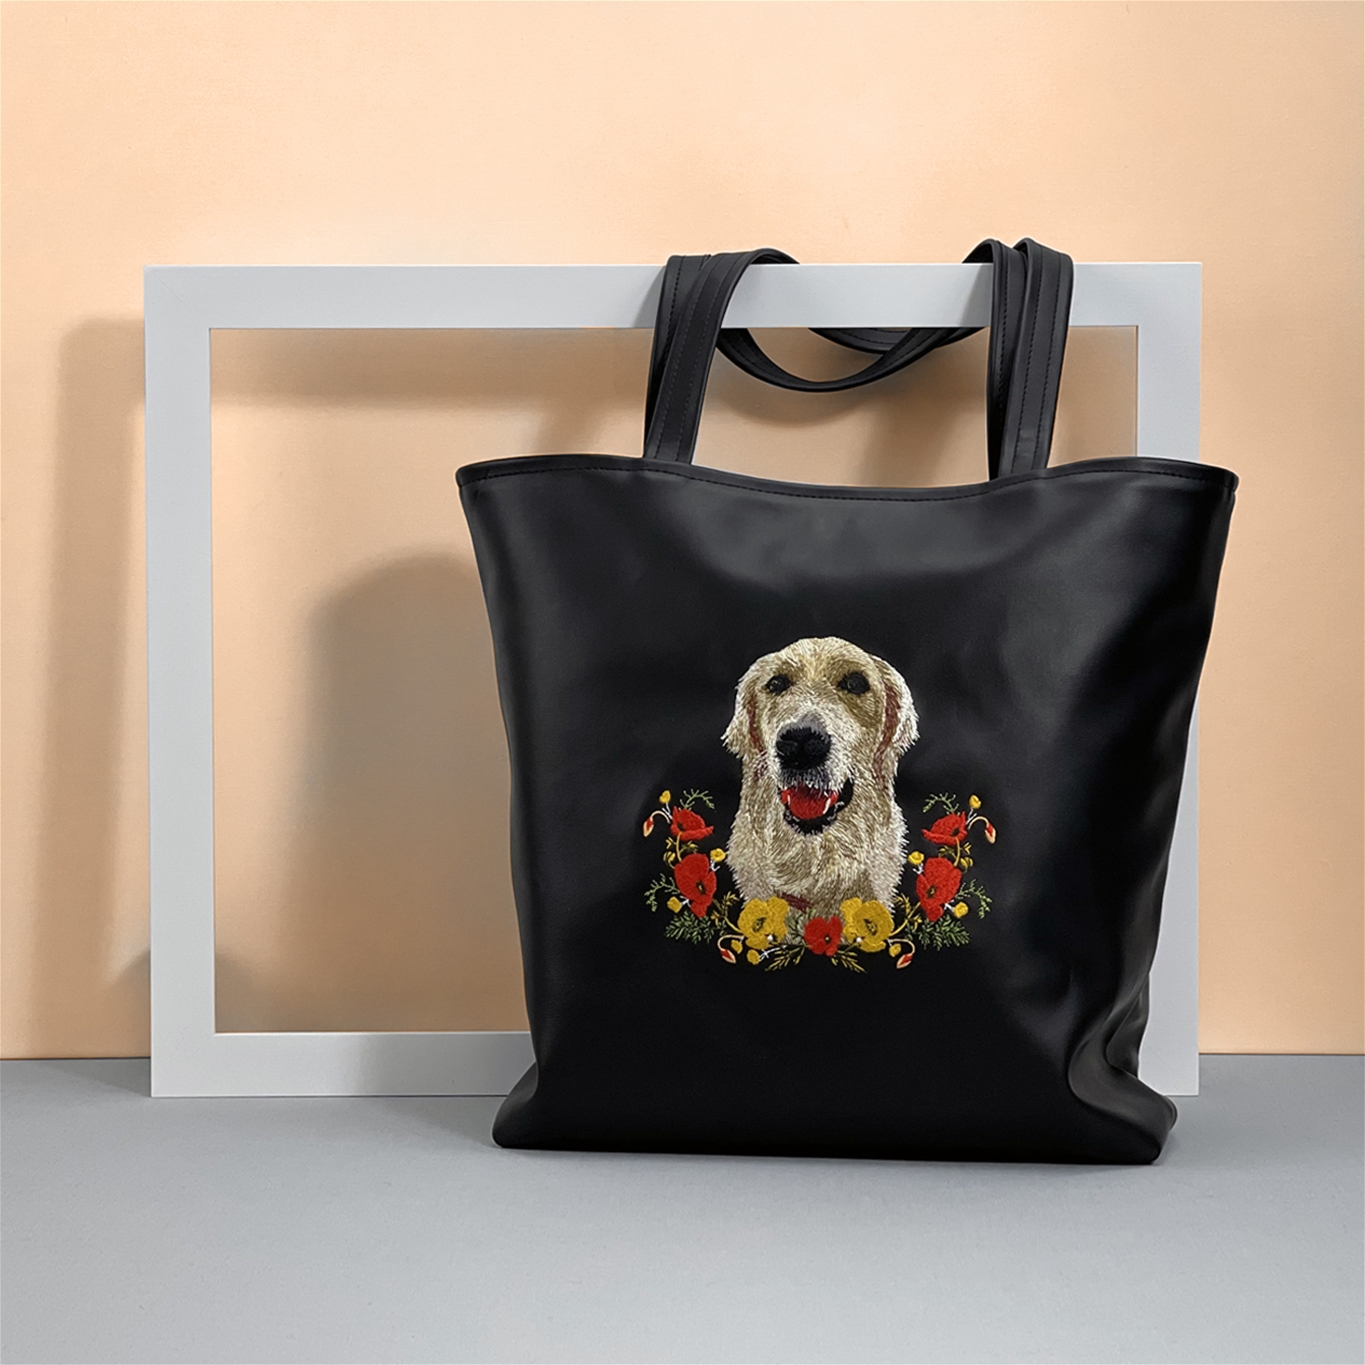 A Touch of Pets Sadie Pet Portrait Tote Bag